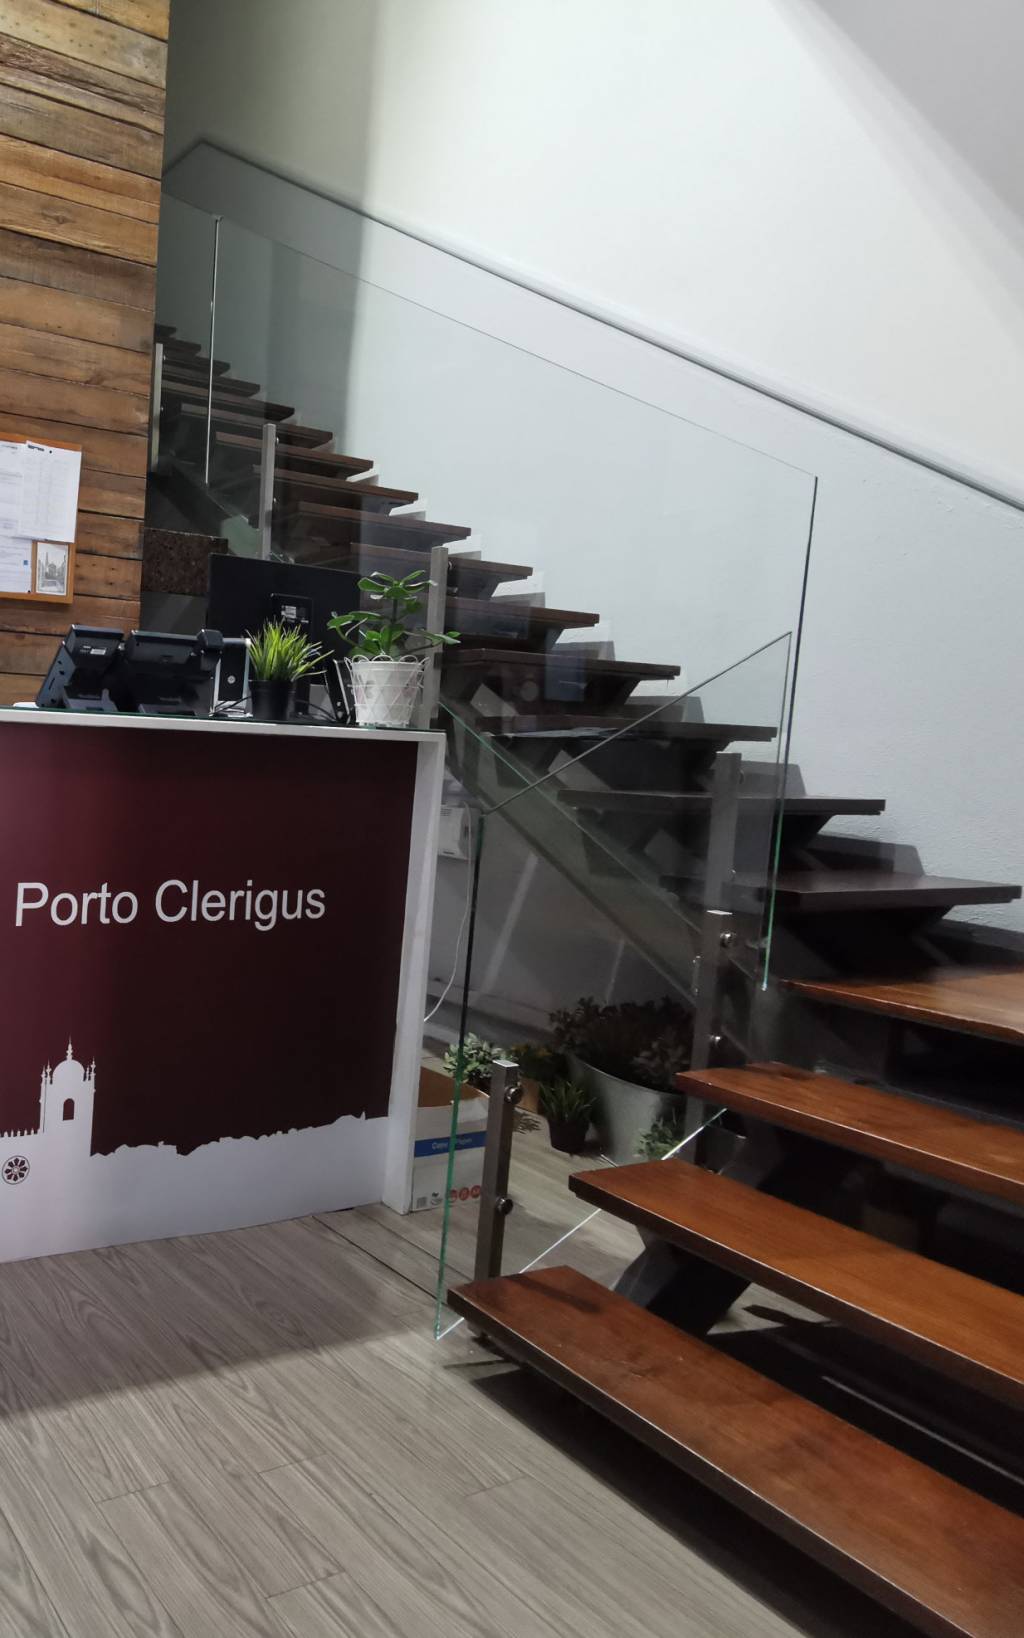 Porto Clerigus